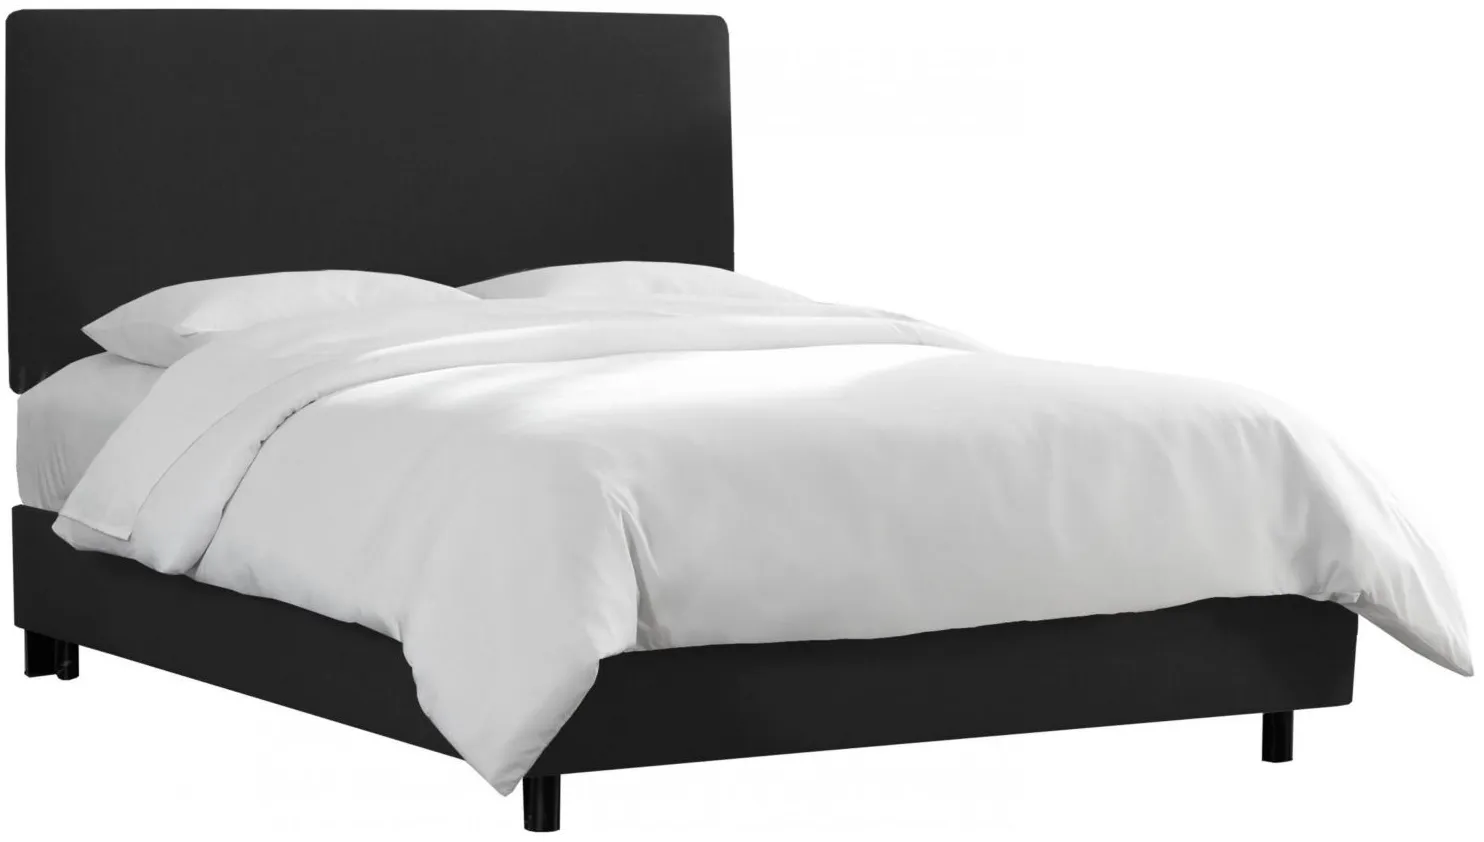 Valerie Bed in Linen Black by Skyline